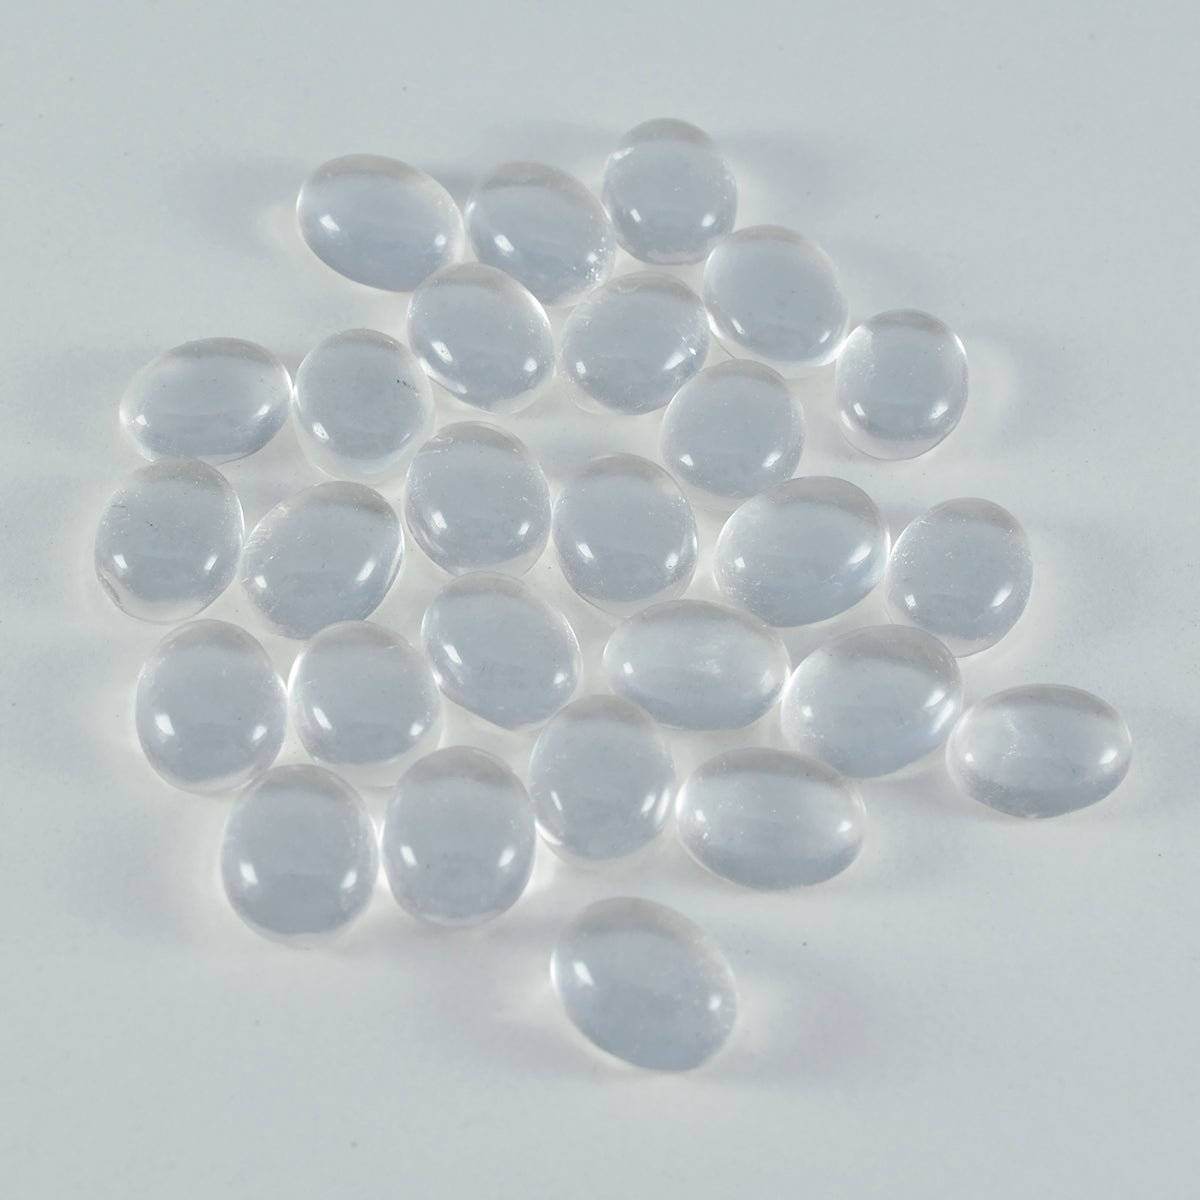 Riyogems 1PC witte kristalkwarts cabochon 7x9 mm ovale vorm mooie kwaliteit edelsteen